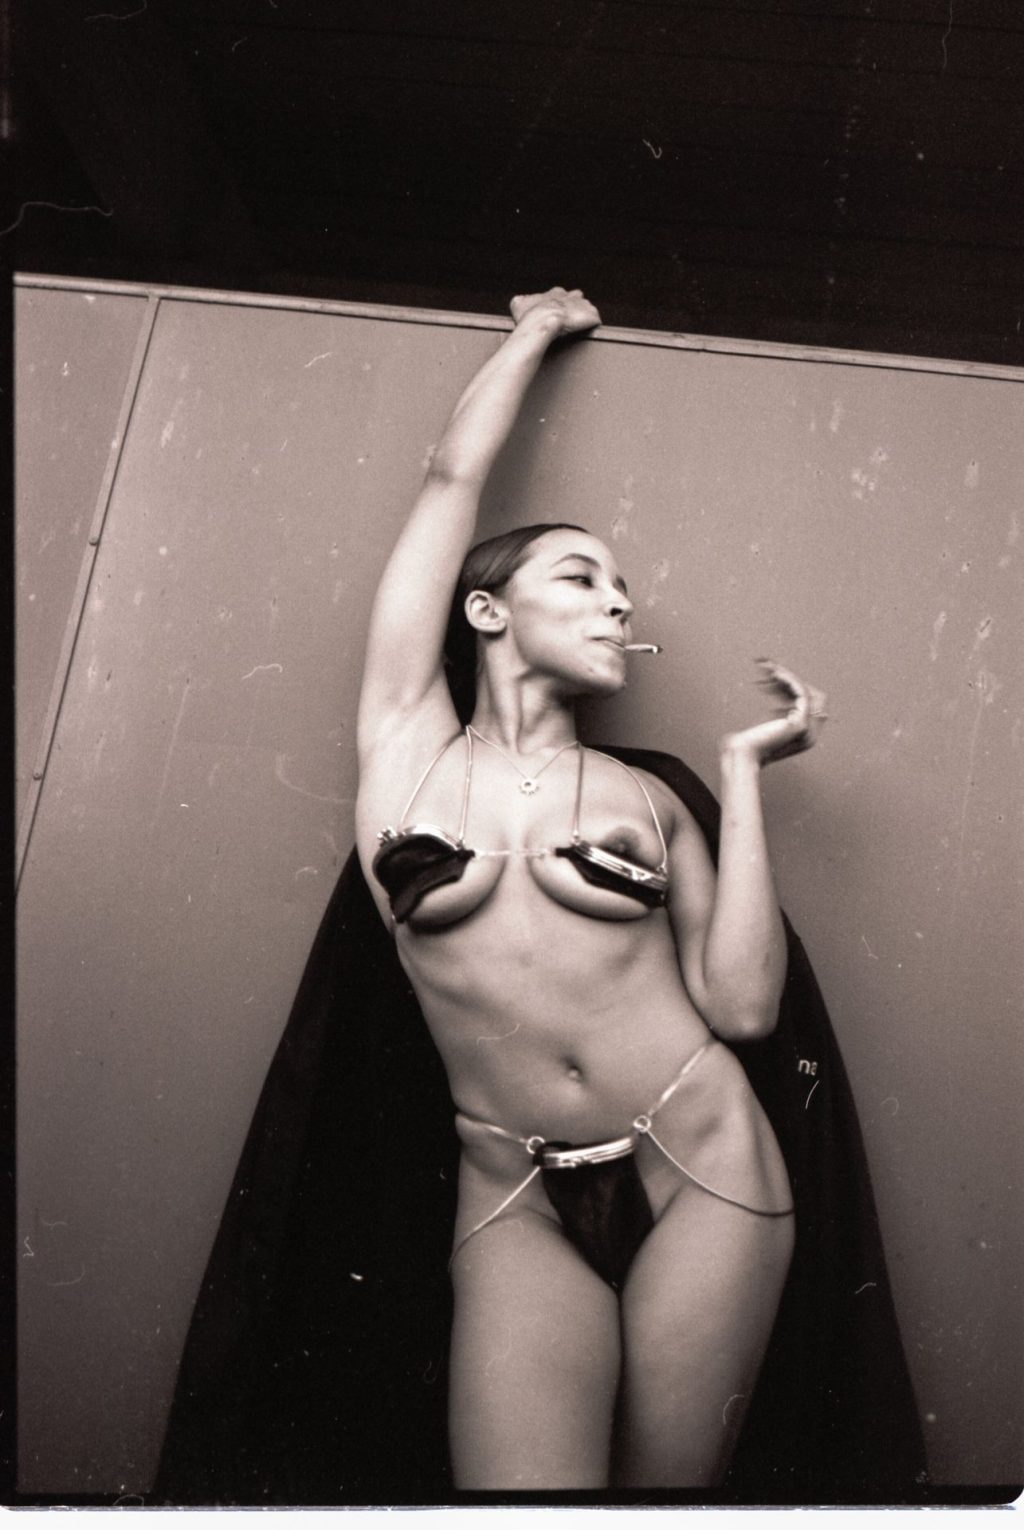 Tinashe Nude &amp; Sexy (41 Photos)